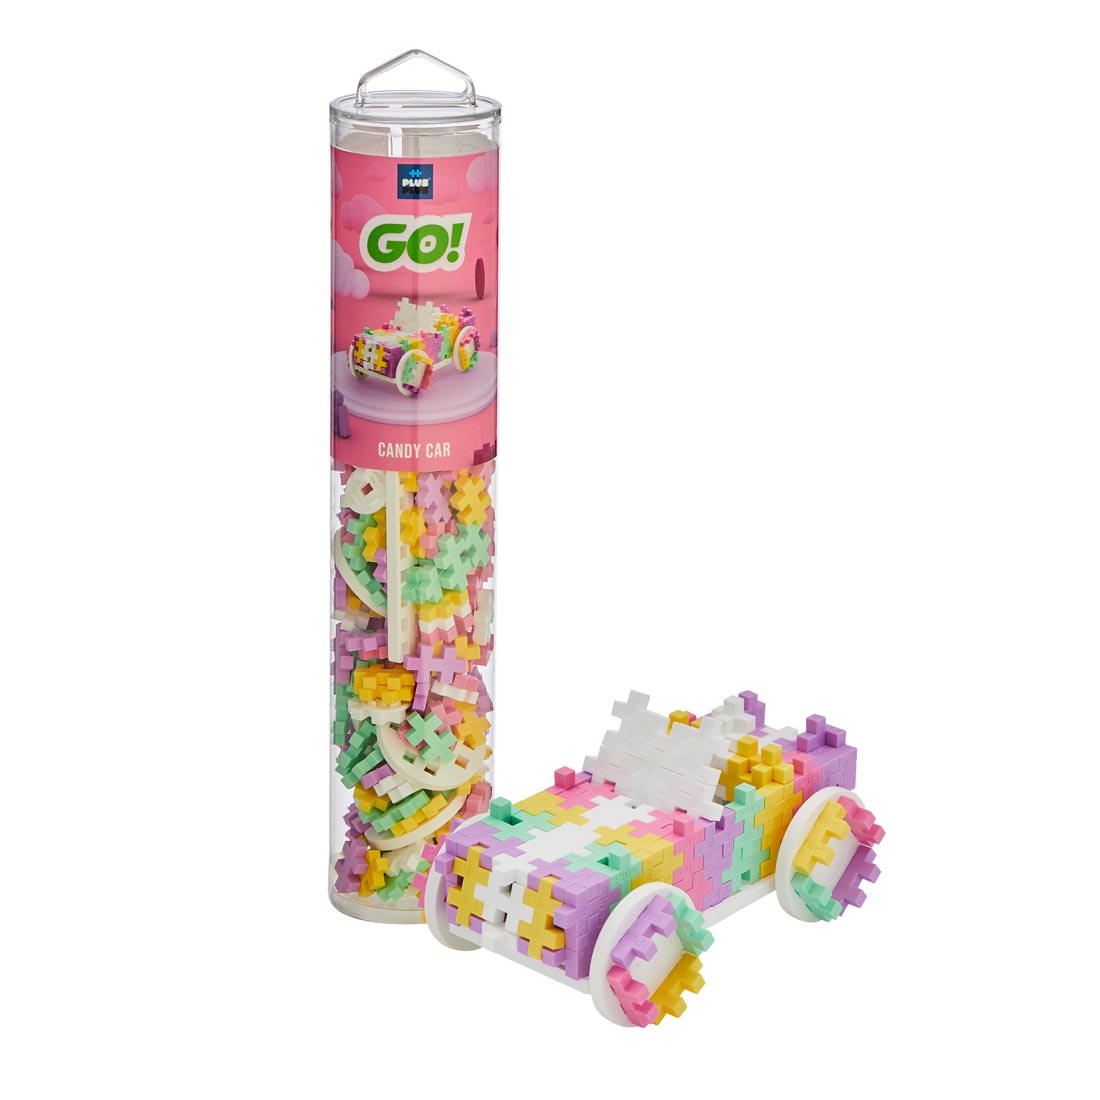 Plus-Plus Go! 200-Piece Candy Car Tube beside a sample creation